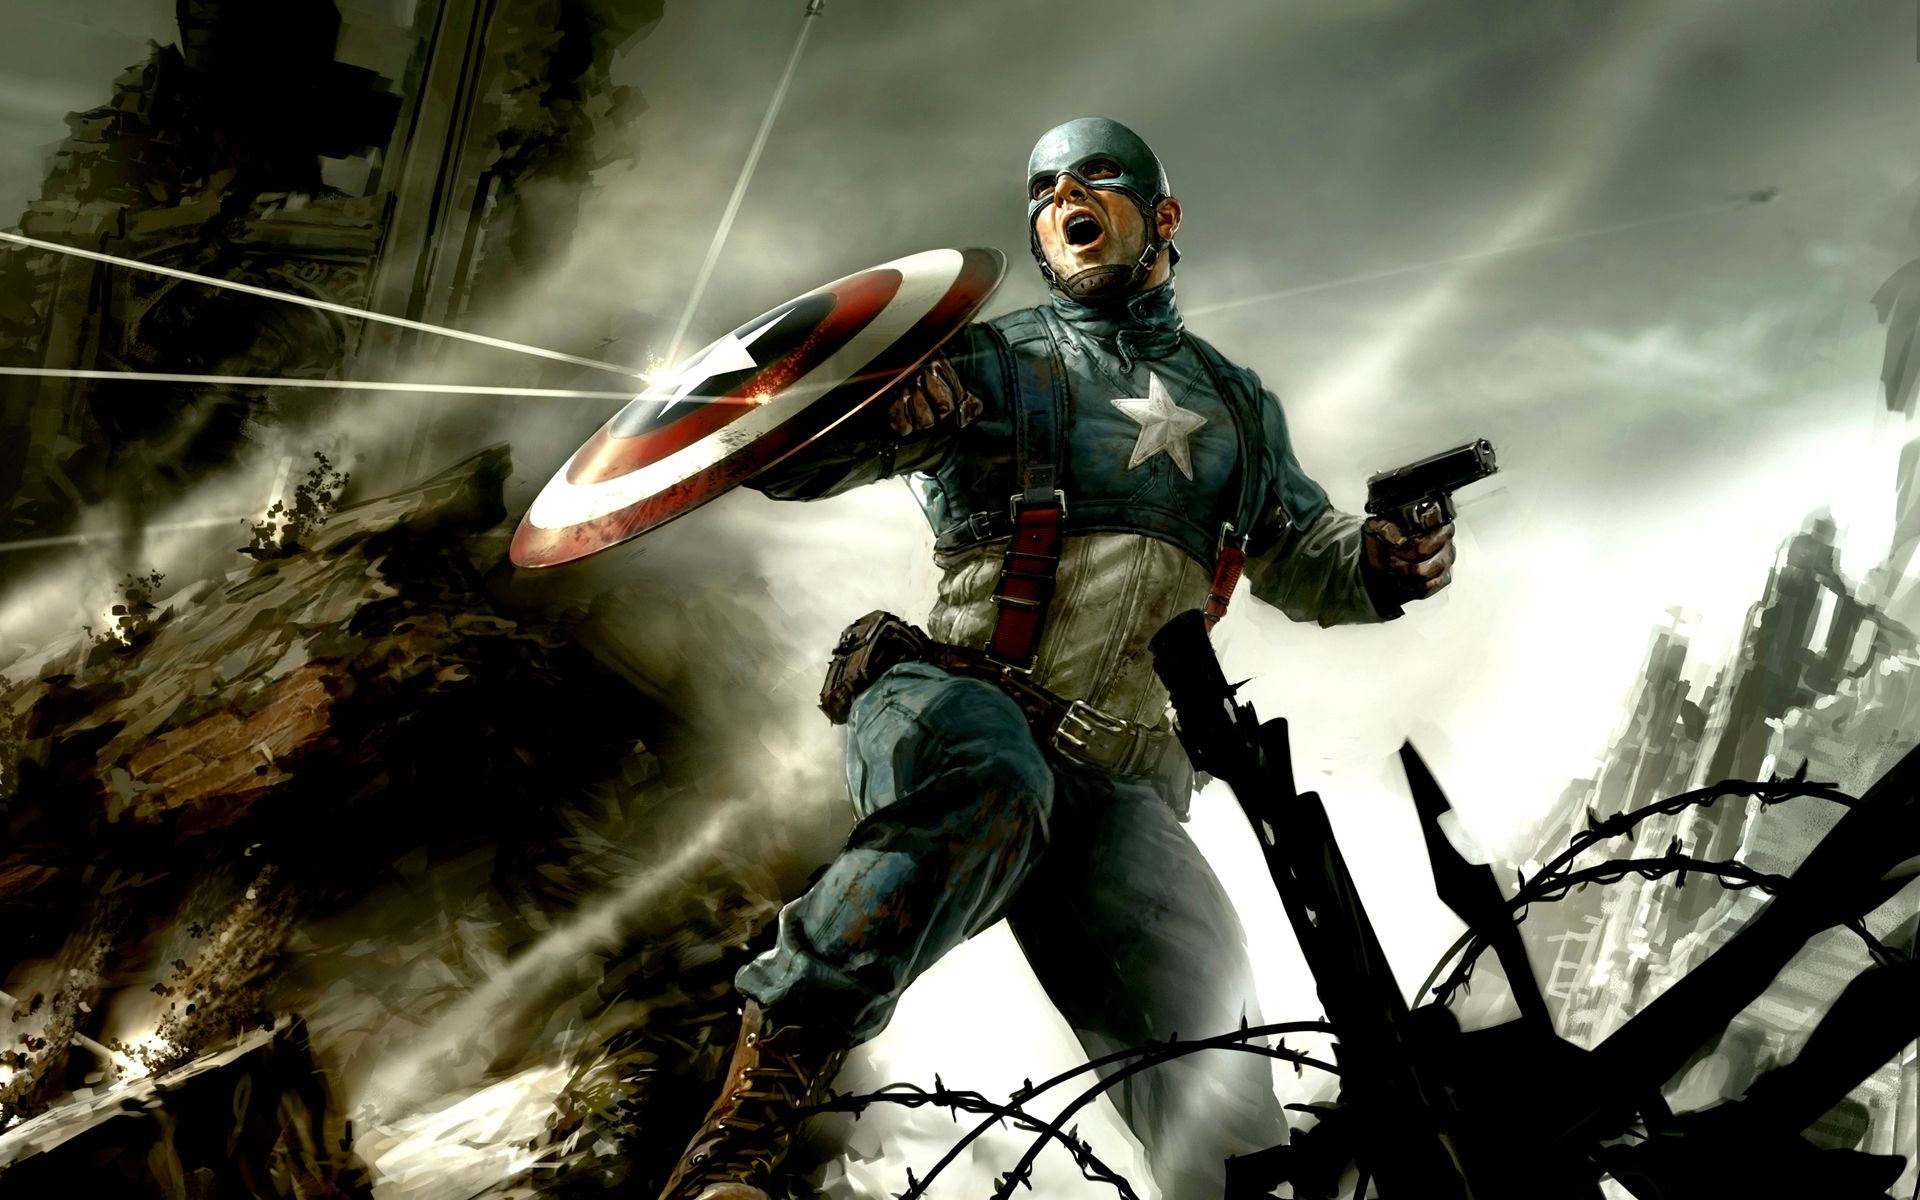 Captain America Wallpaper HD